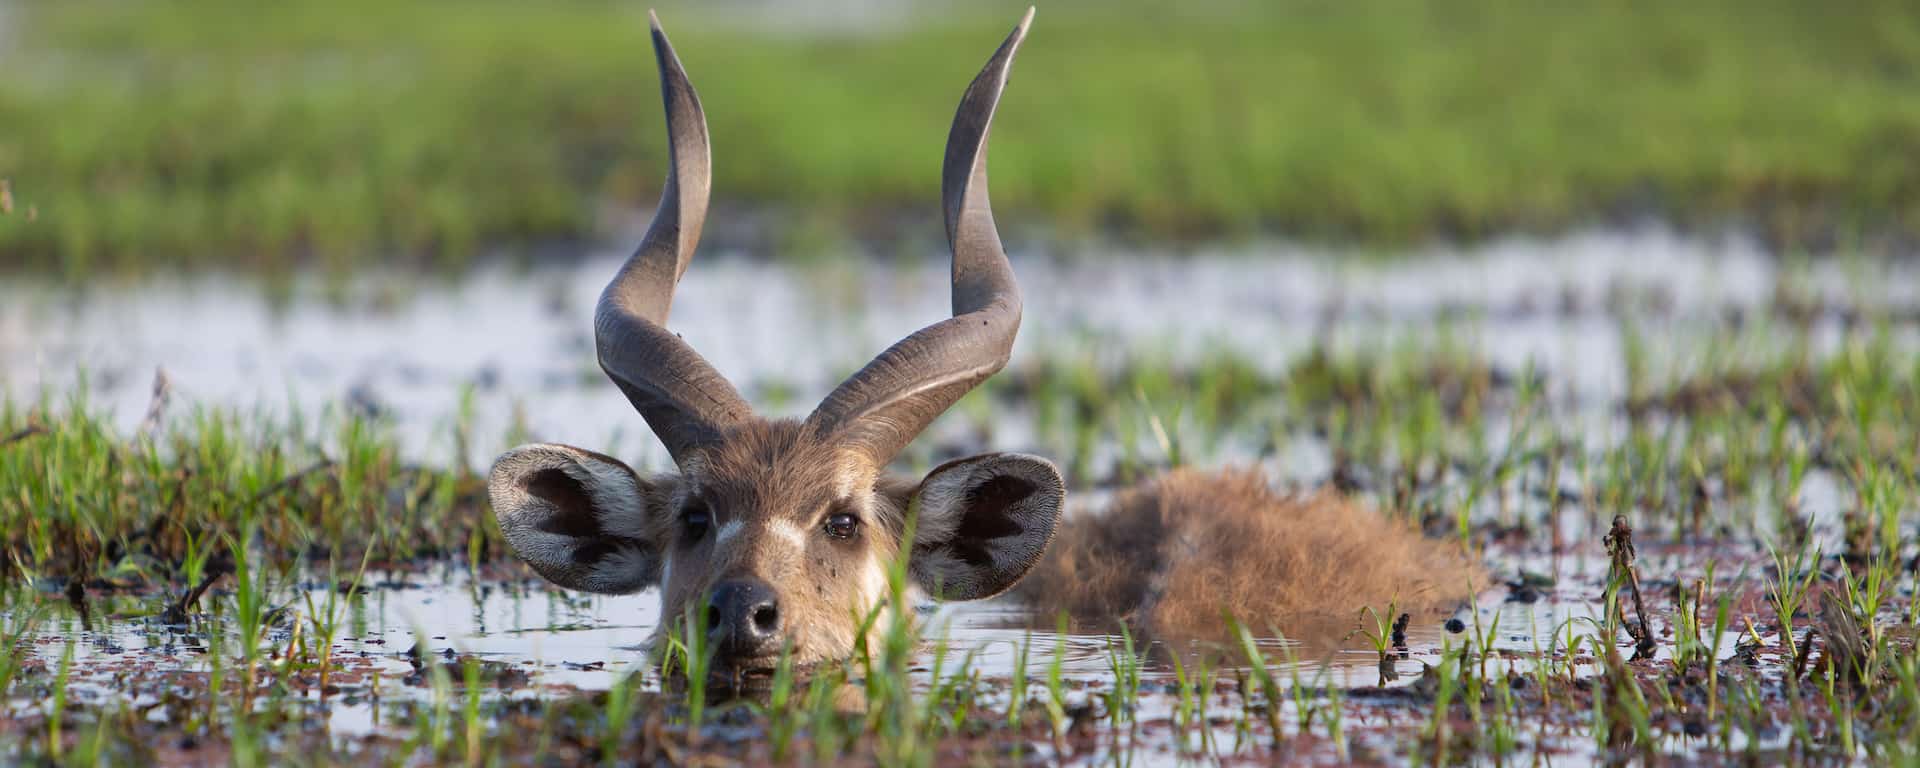 Saiwa Swamp Sitatunga Antelope